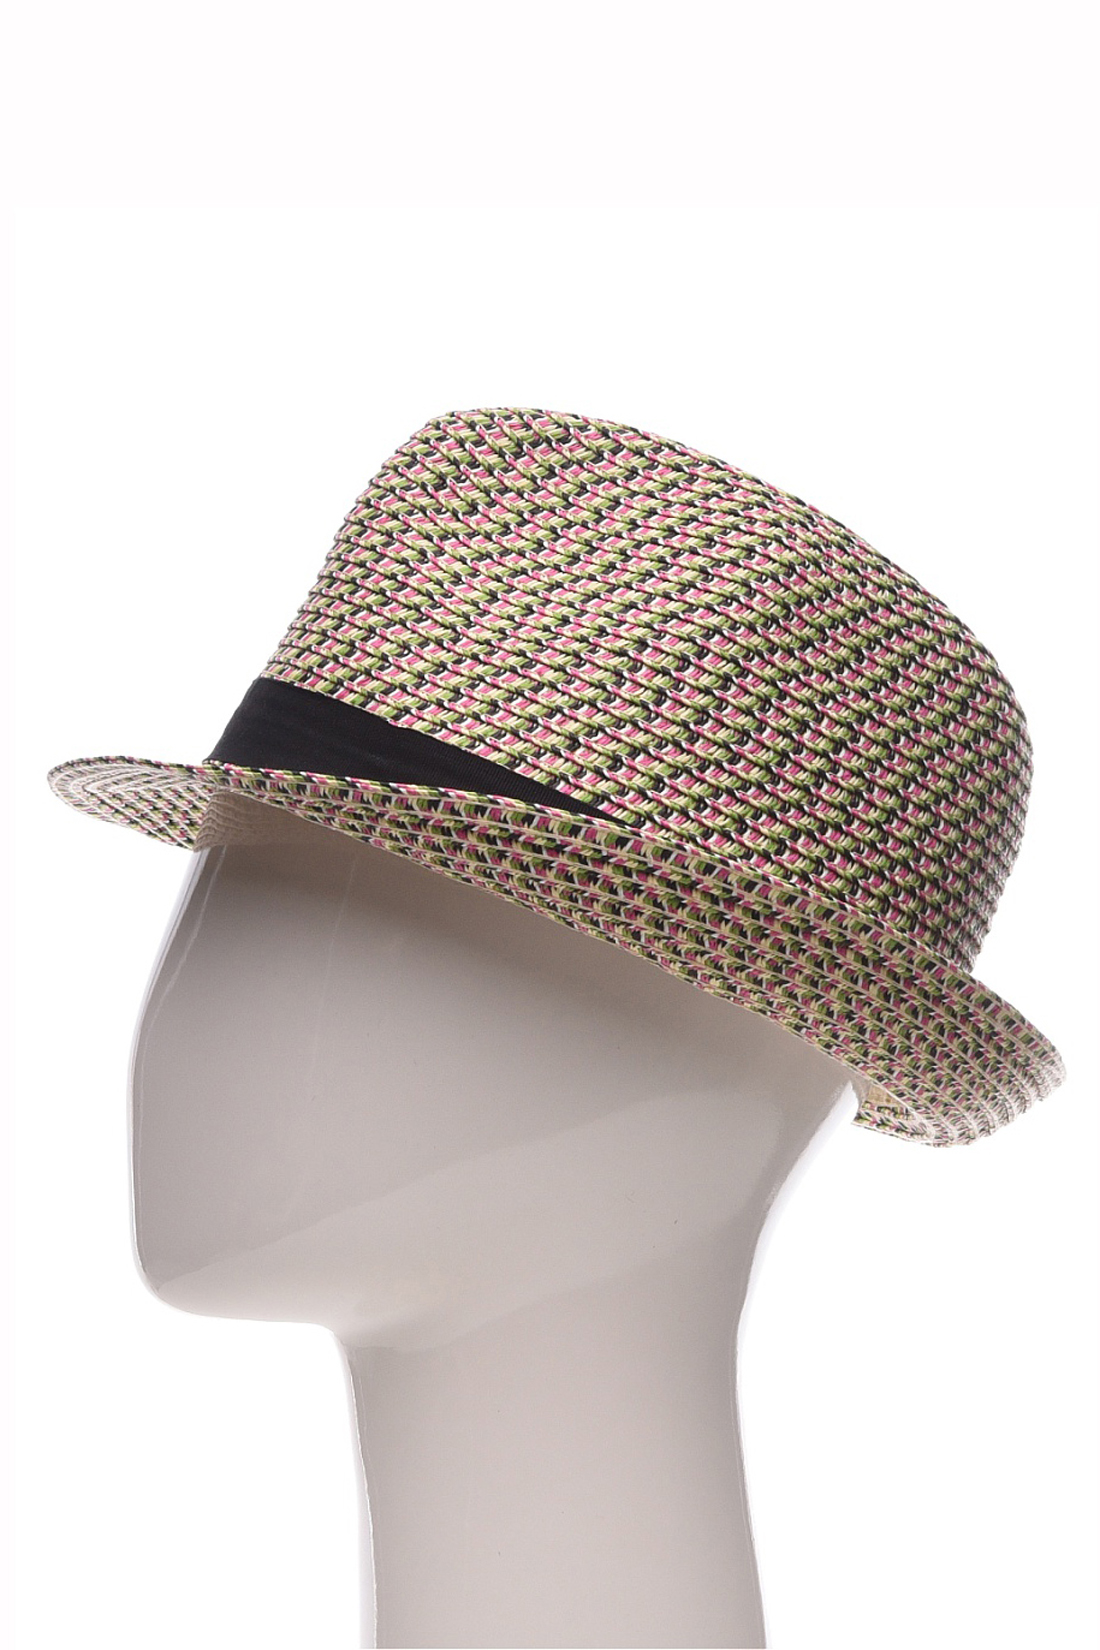 Шляпа с разноцветным плетением (арт. baon B849001), размер Б/р 58 Шляпа с разноцветным плетением (арт. baon B849001) - фото 5